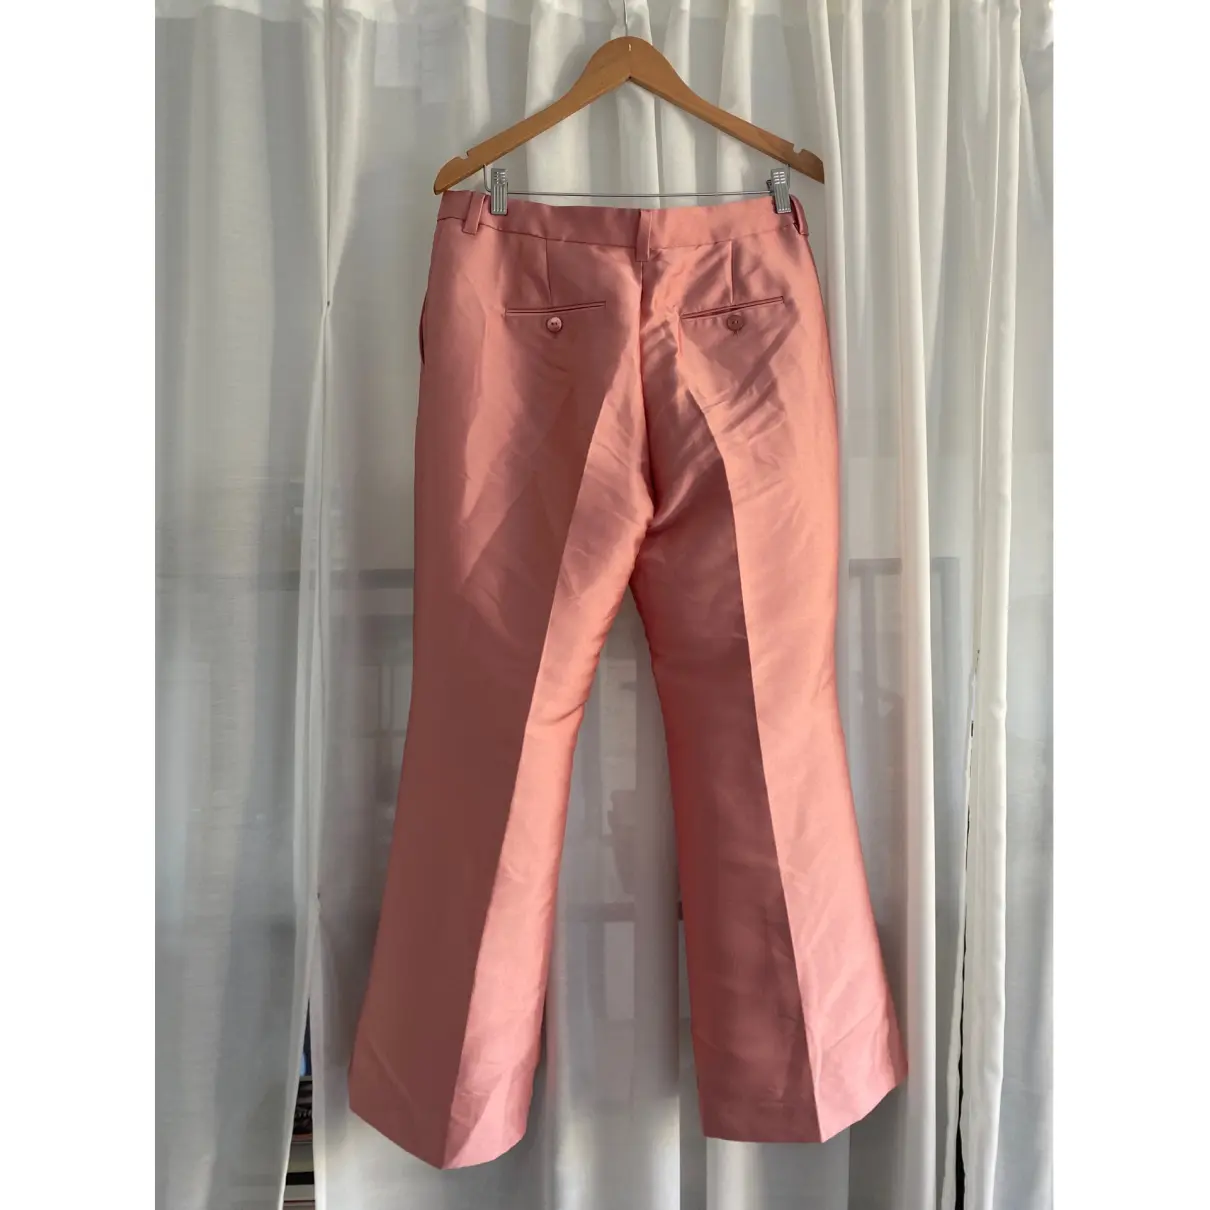 Buy Stine Goya Trousers online